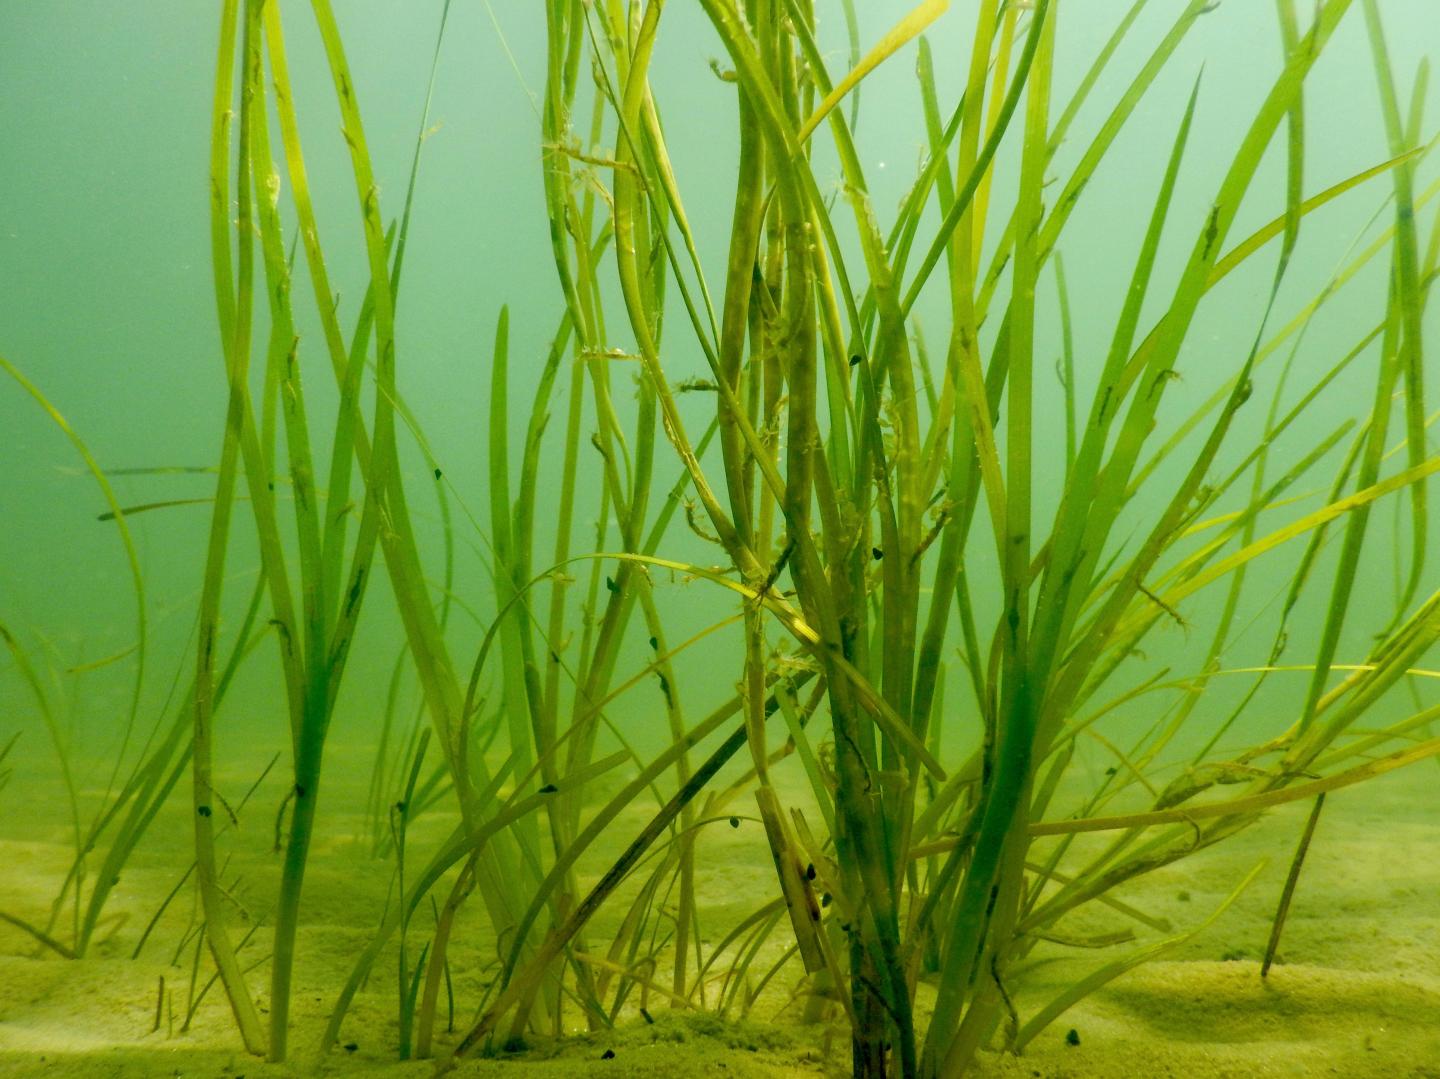 Seagrass Nursery Habitat